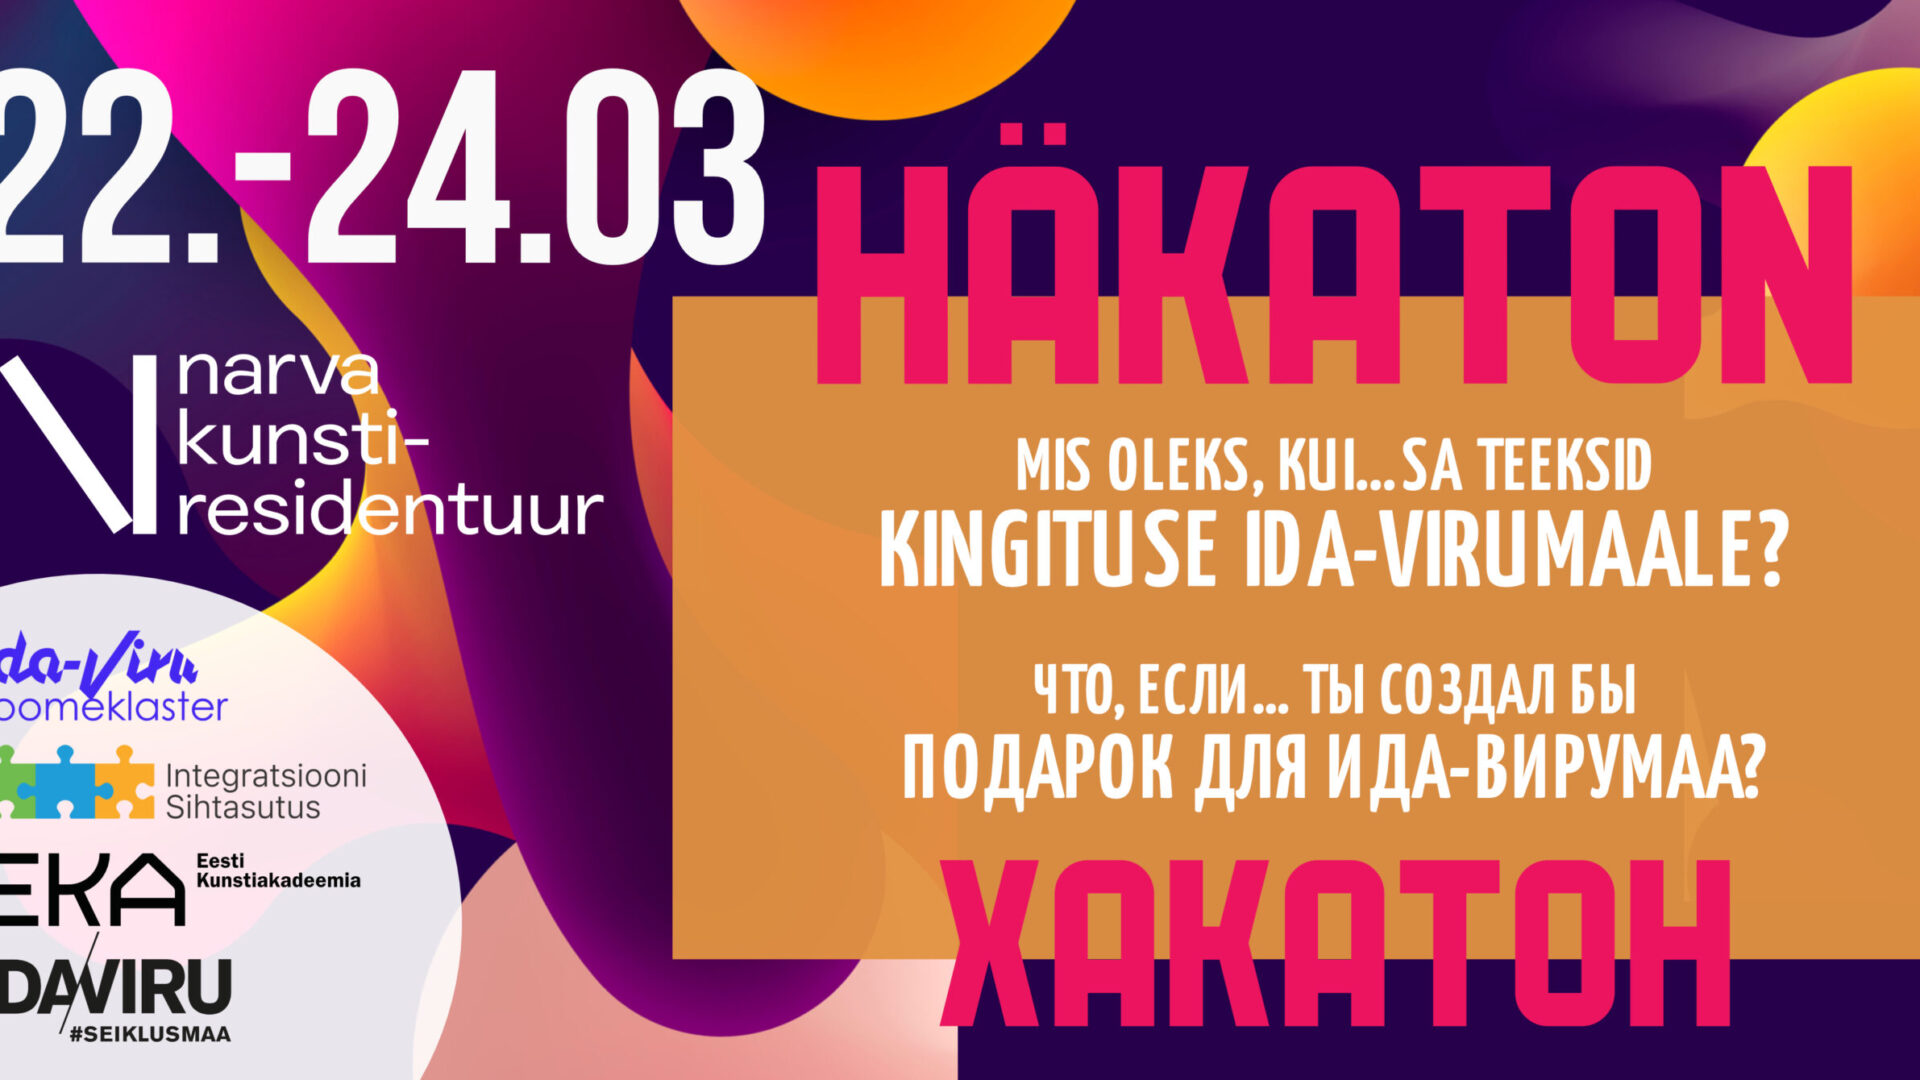 hakaton_facebook_event